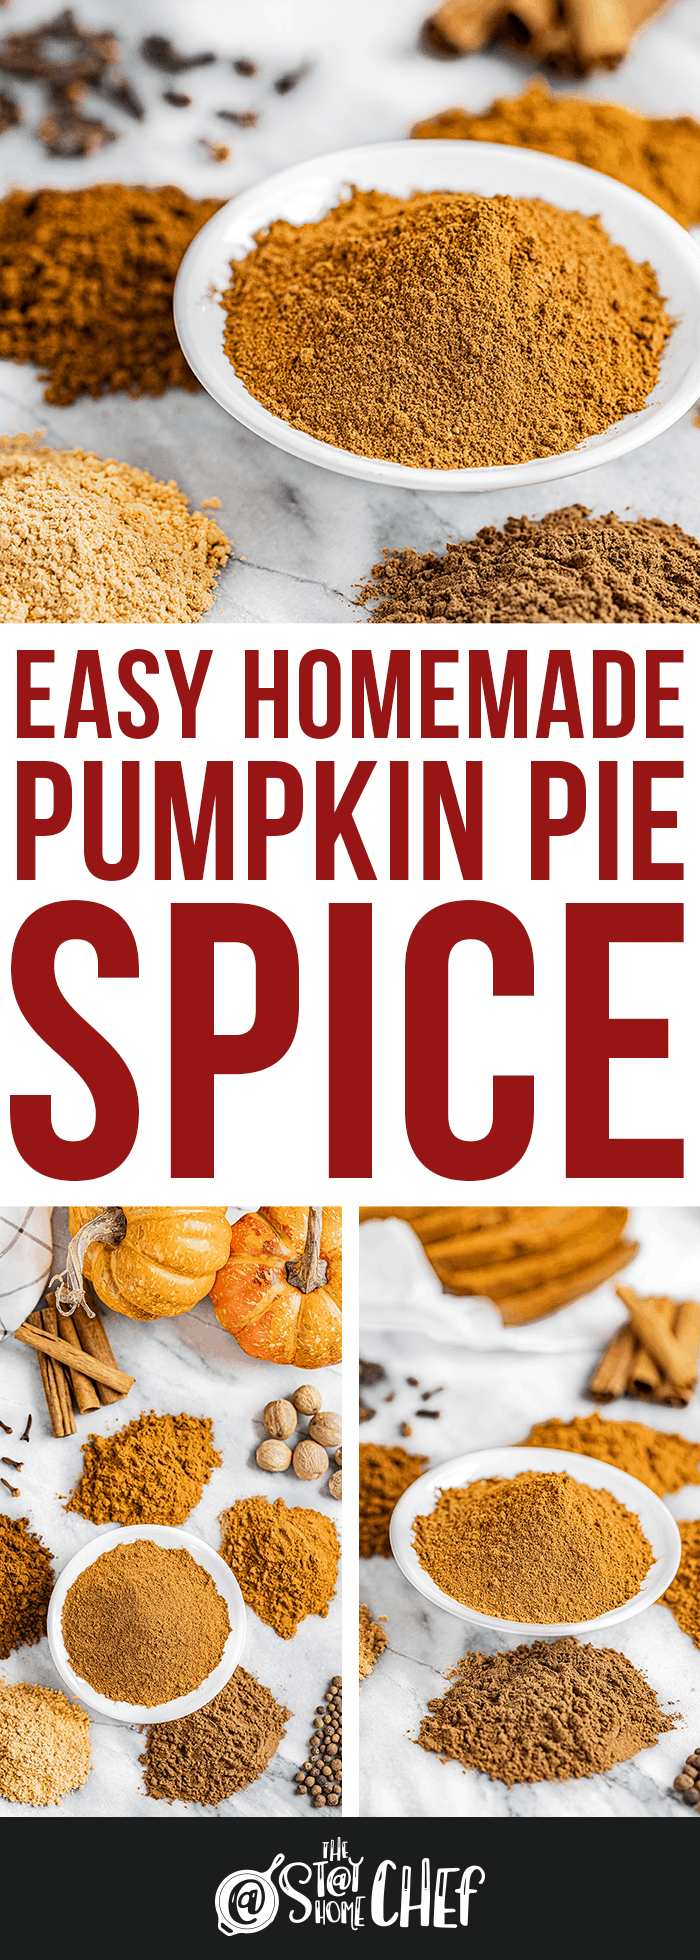 Easy Homemade Pumpkin Pie Spice